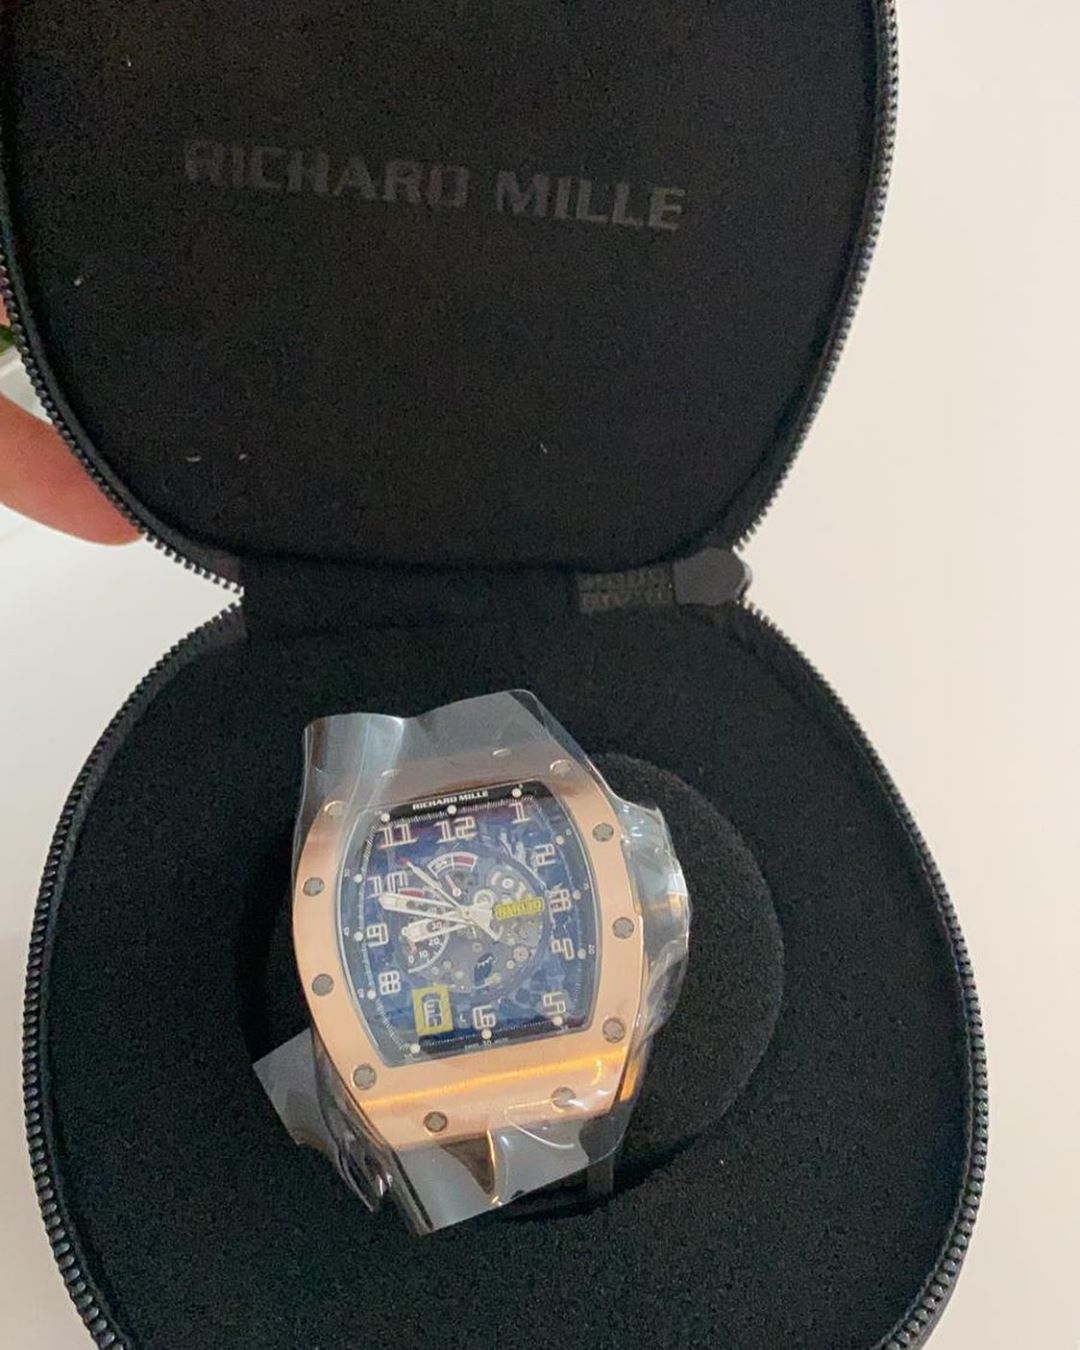 Davido Buys A Richard Millie Watch Worth 2 Million Dolllars